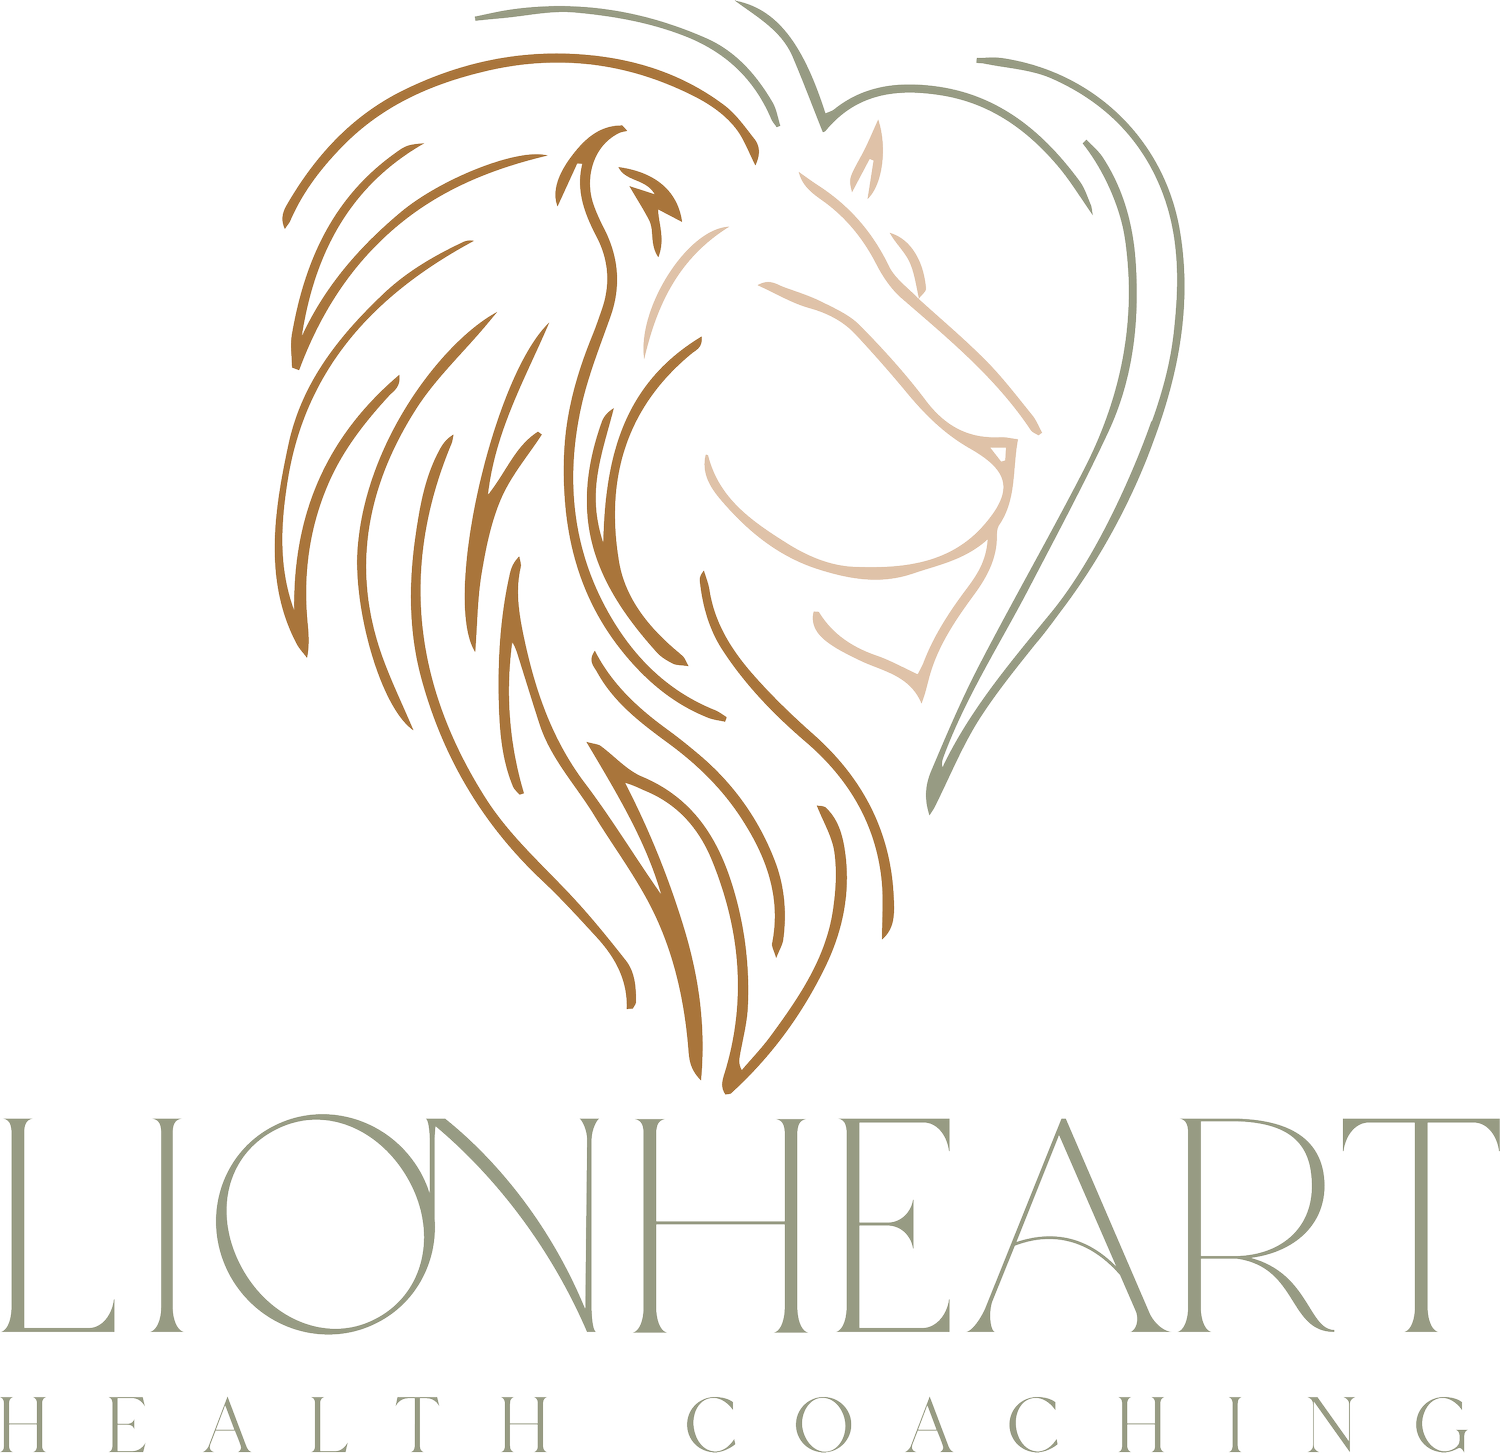 Lionheart Health Coaching